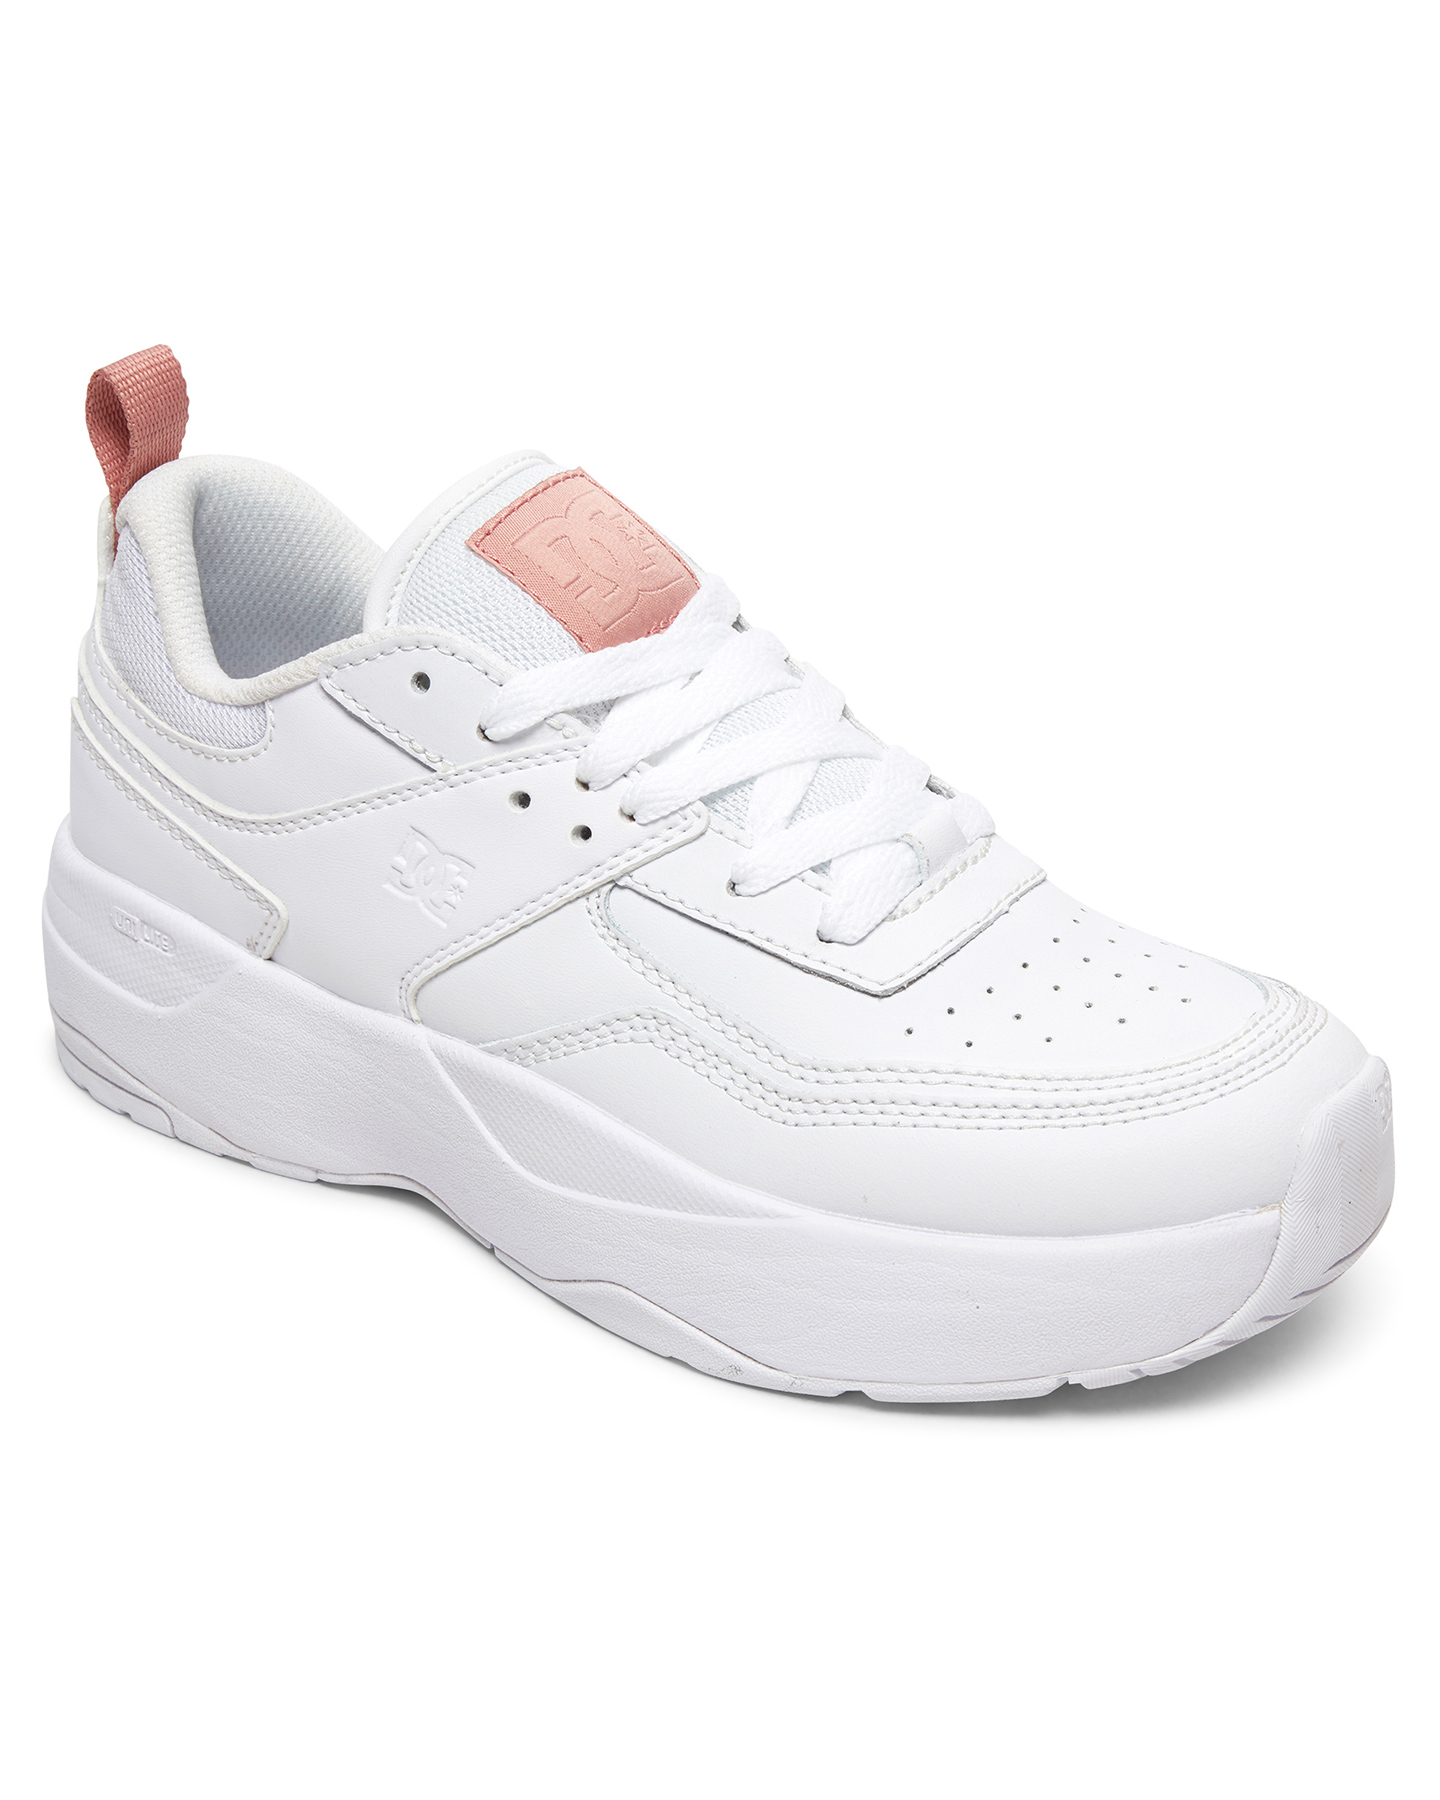 Dc Shoes Womens E.Tribeka Platform Shoe - White/White/Pink | SurfStitch